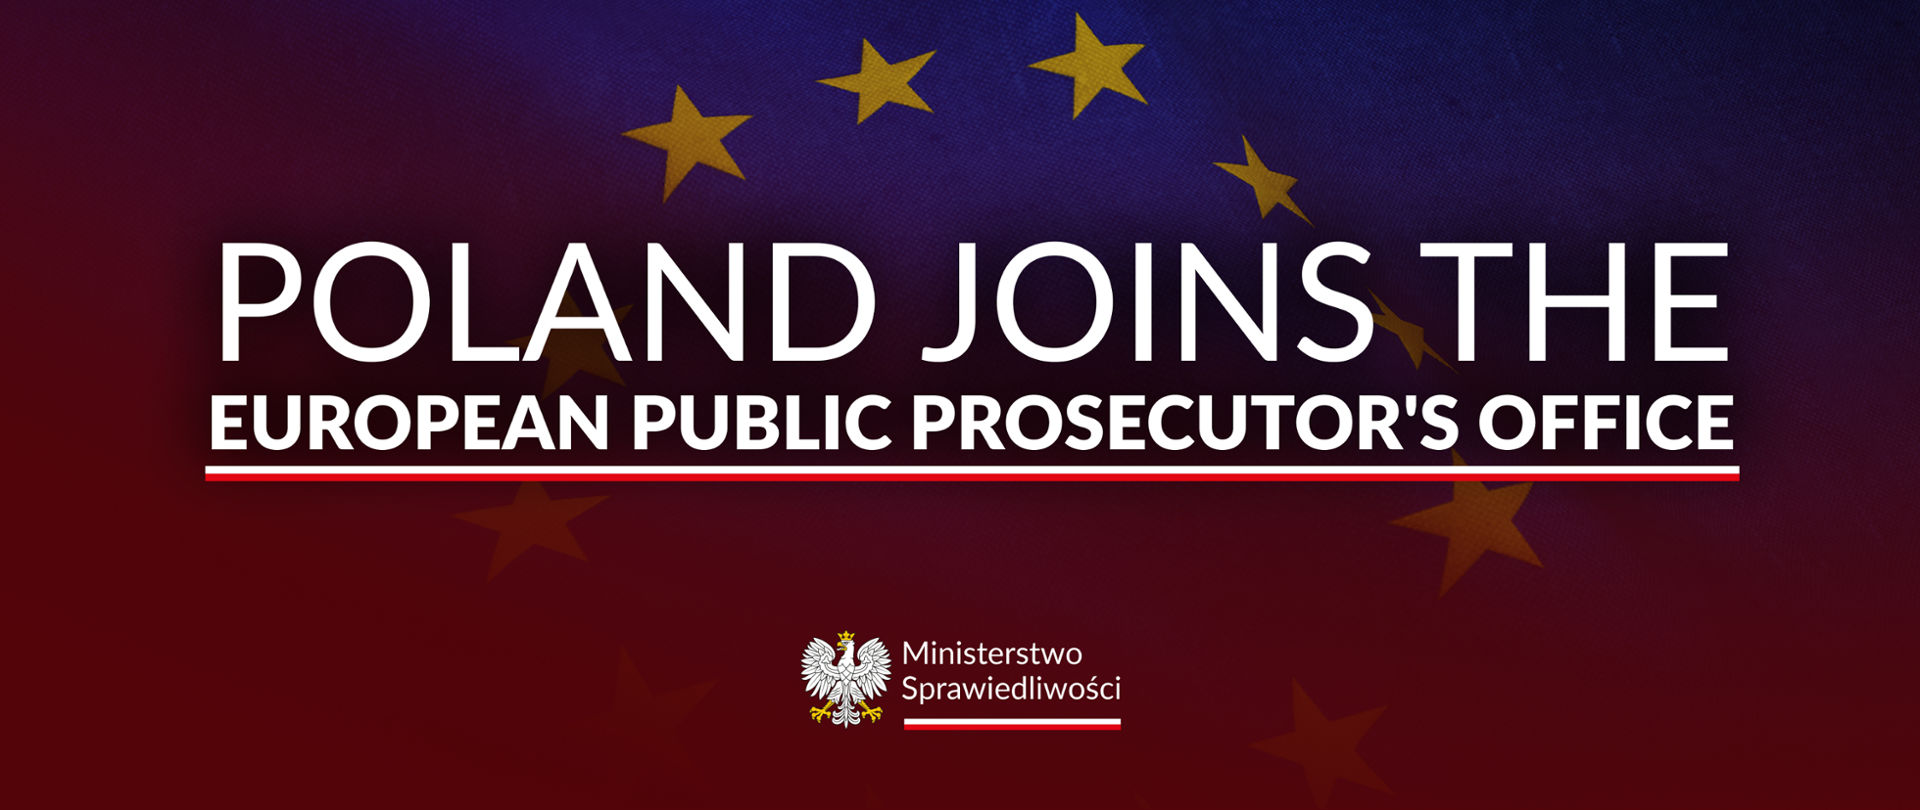 Poland joins the European Public Prosecutor's Office